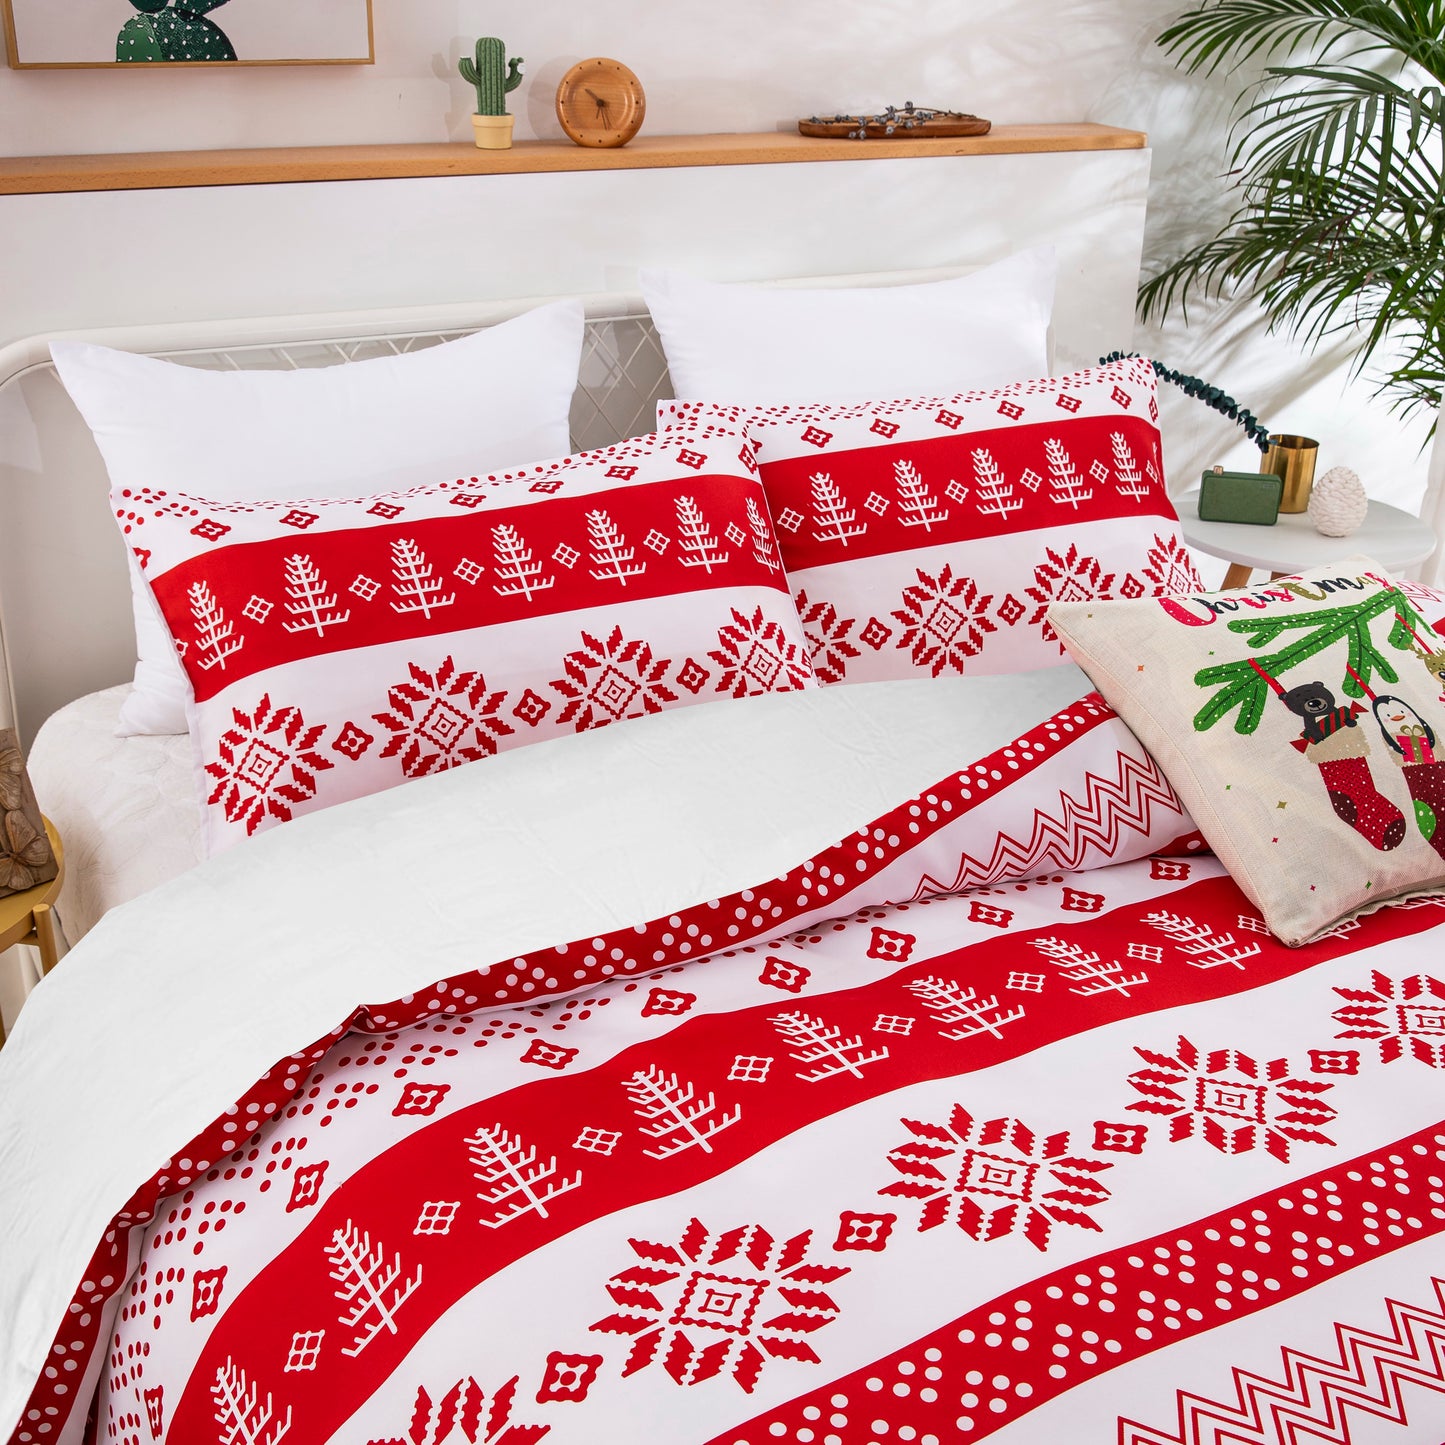 WONGS BEDDING Christmas Elements Style Red Duvet Cover Pillowcase Set